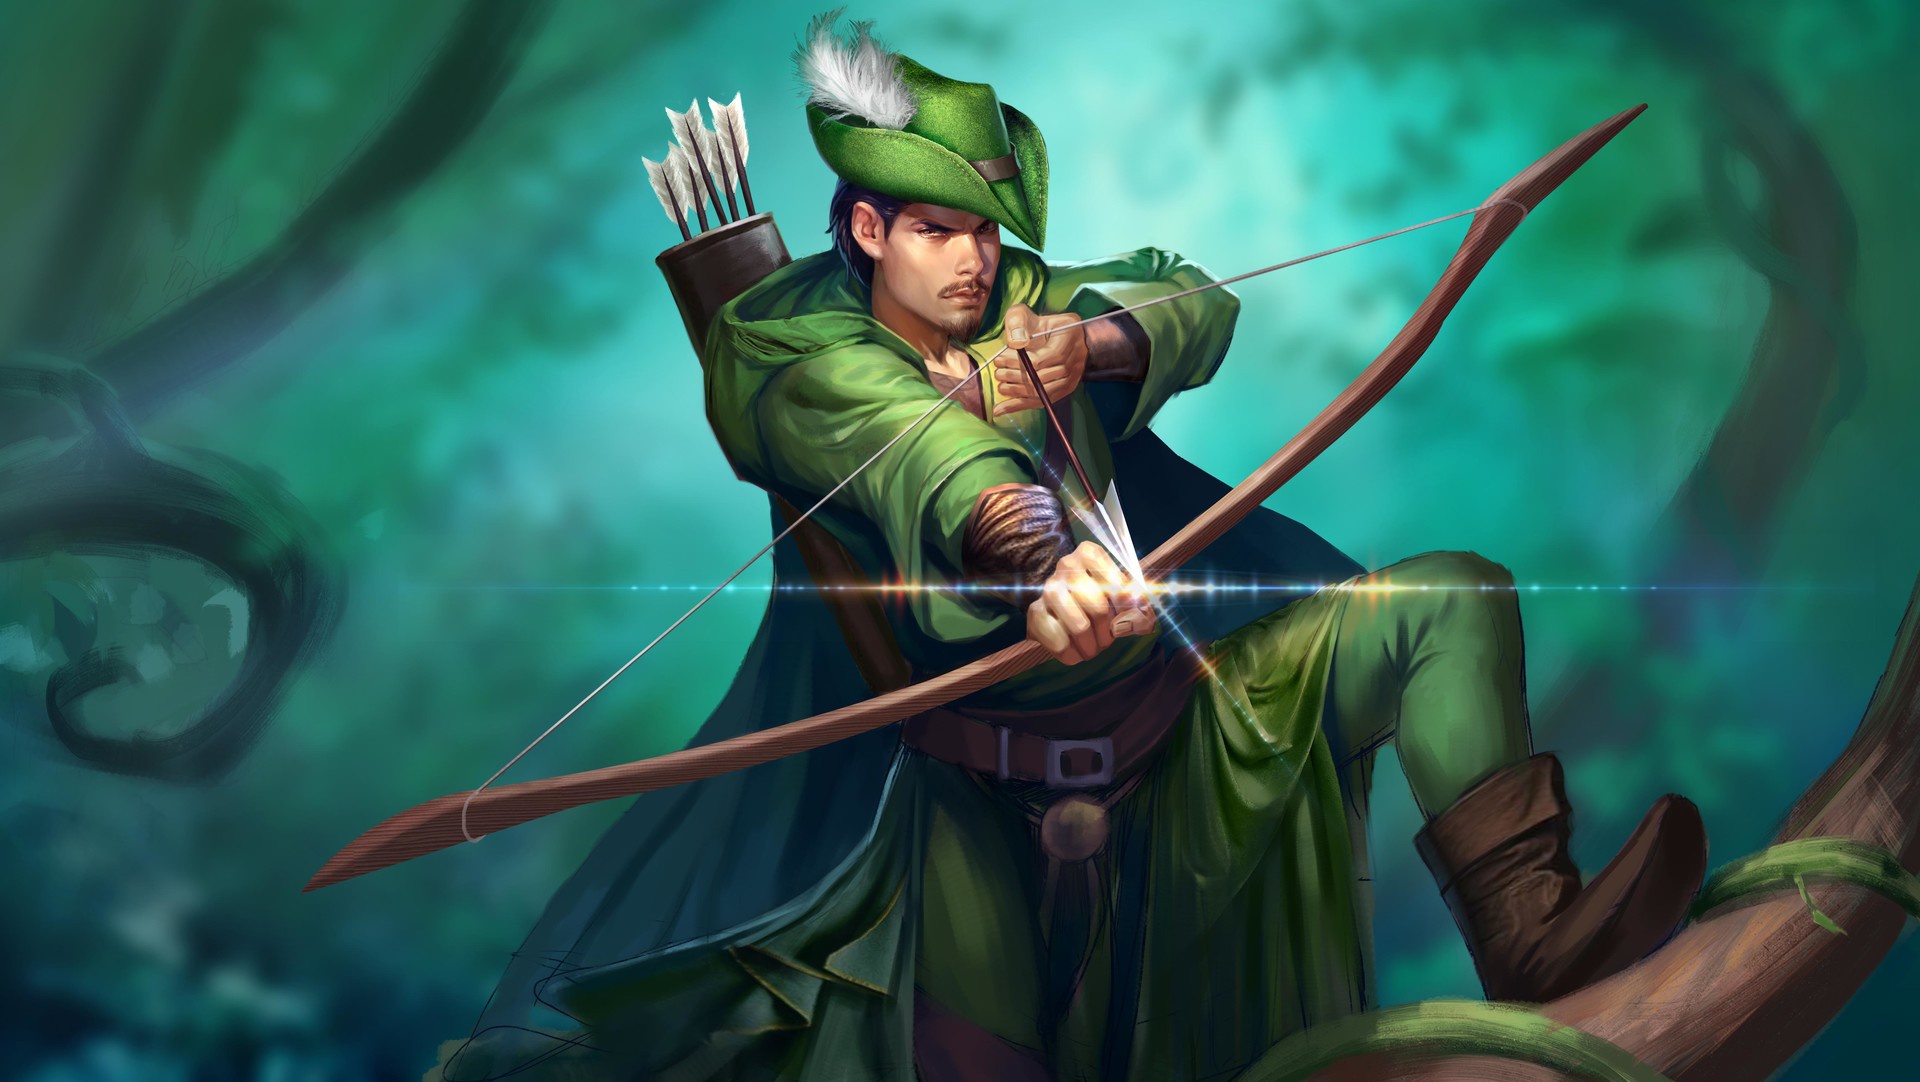 Descarga gratuita de fondo de pantalla para móvil de Fantasía, Arquero, Robin Hood.